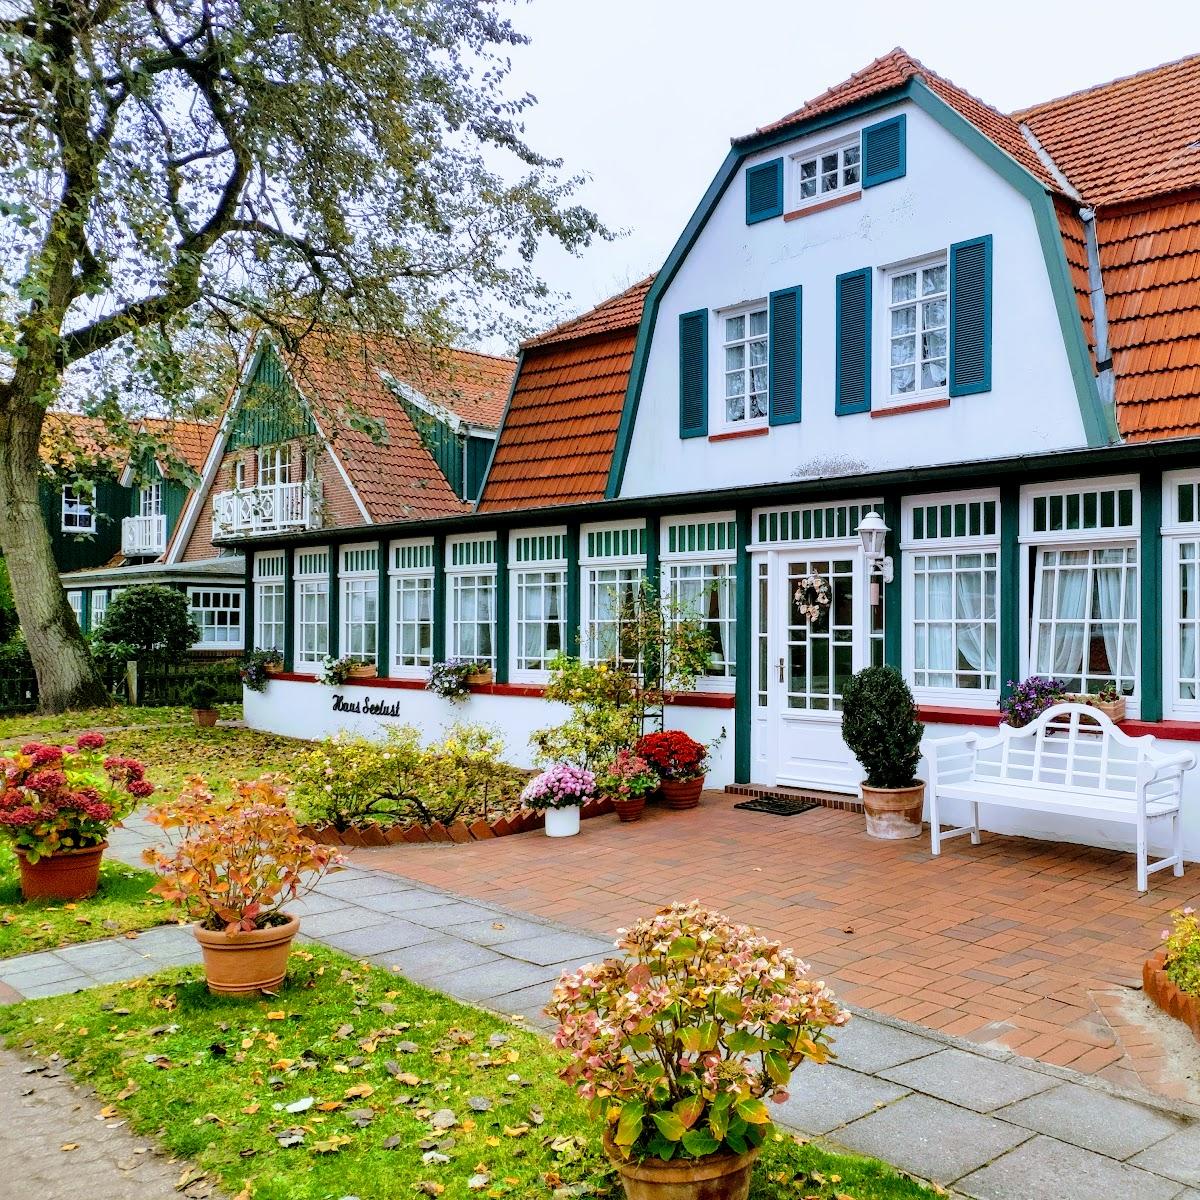 Restaurant "Haus Seelust" in Spiekeroog